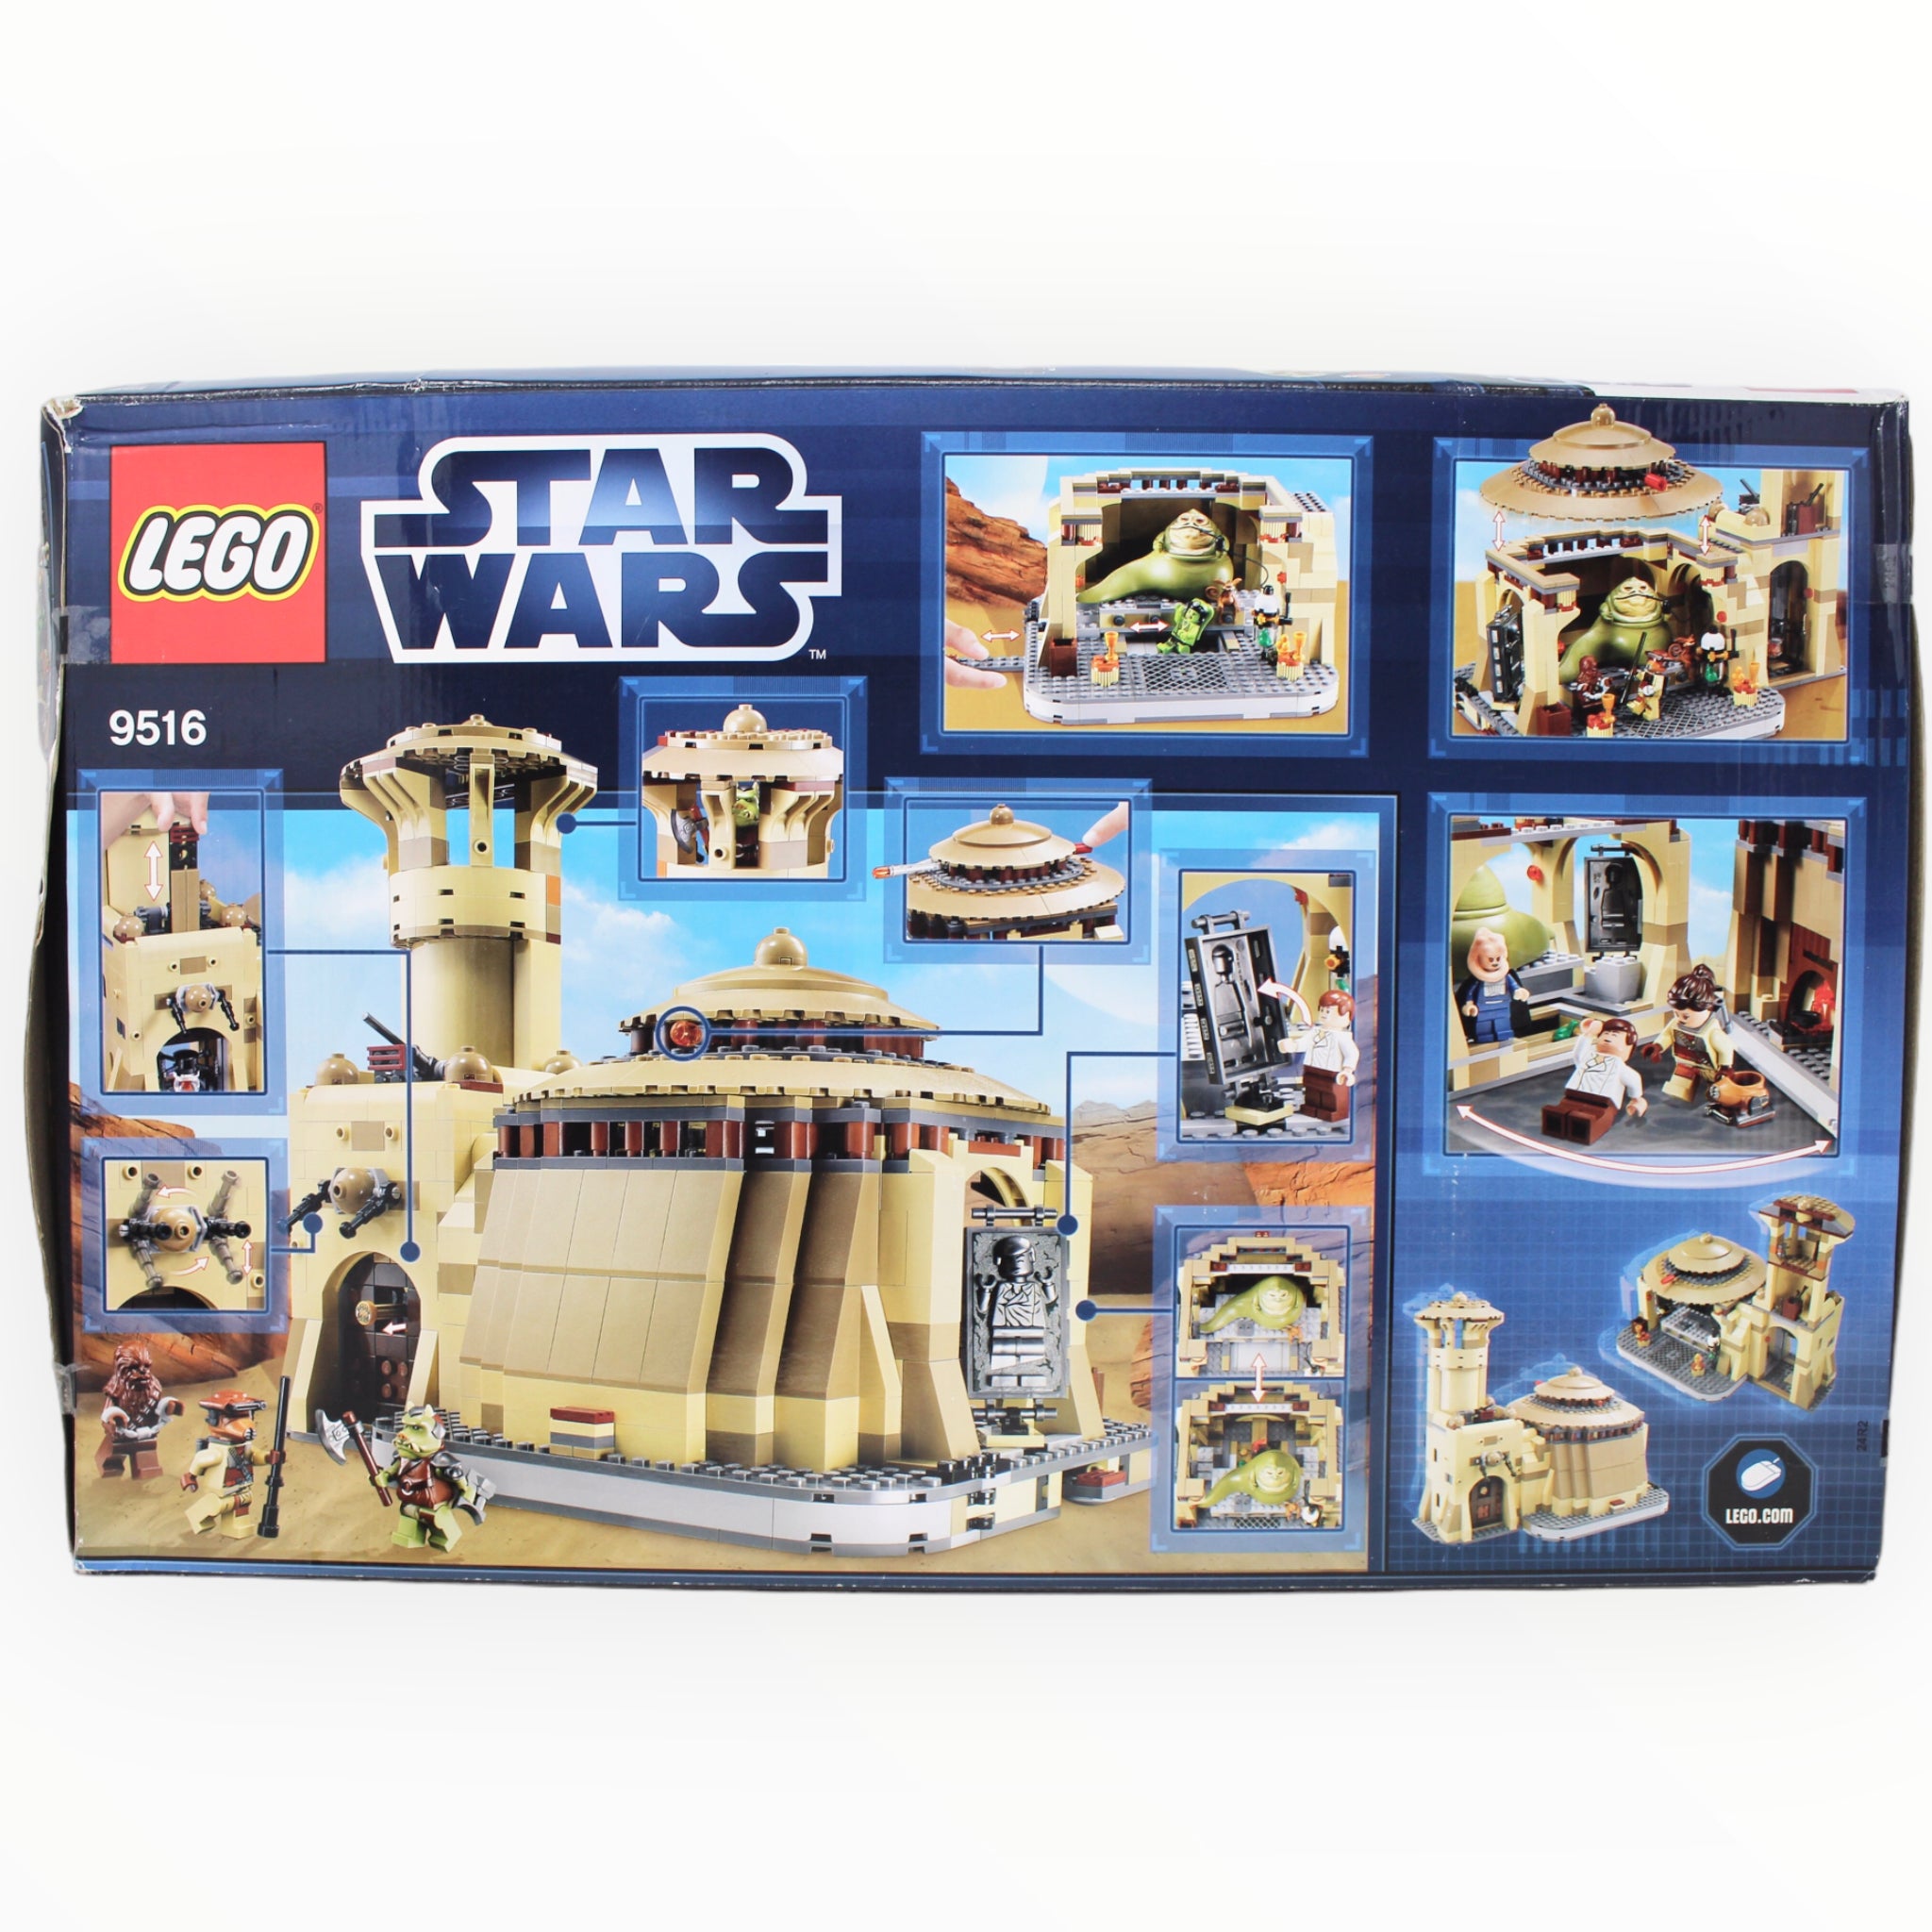 Retired Set 9516 Star Wars Jabba’s Palace (damaged box)